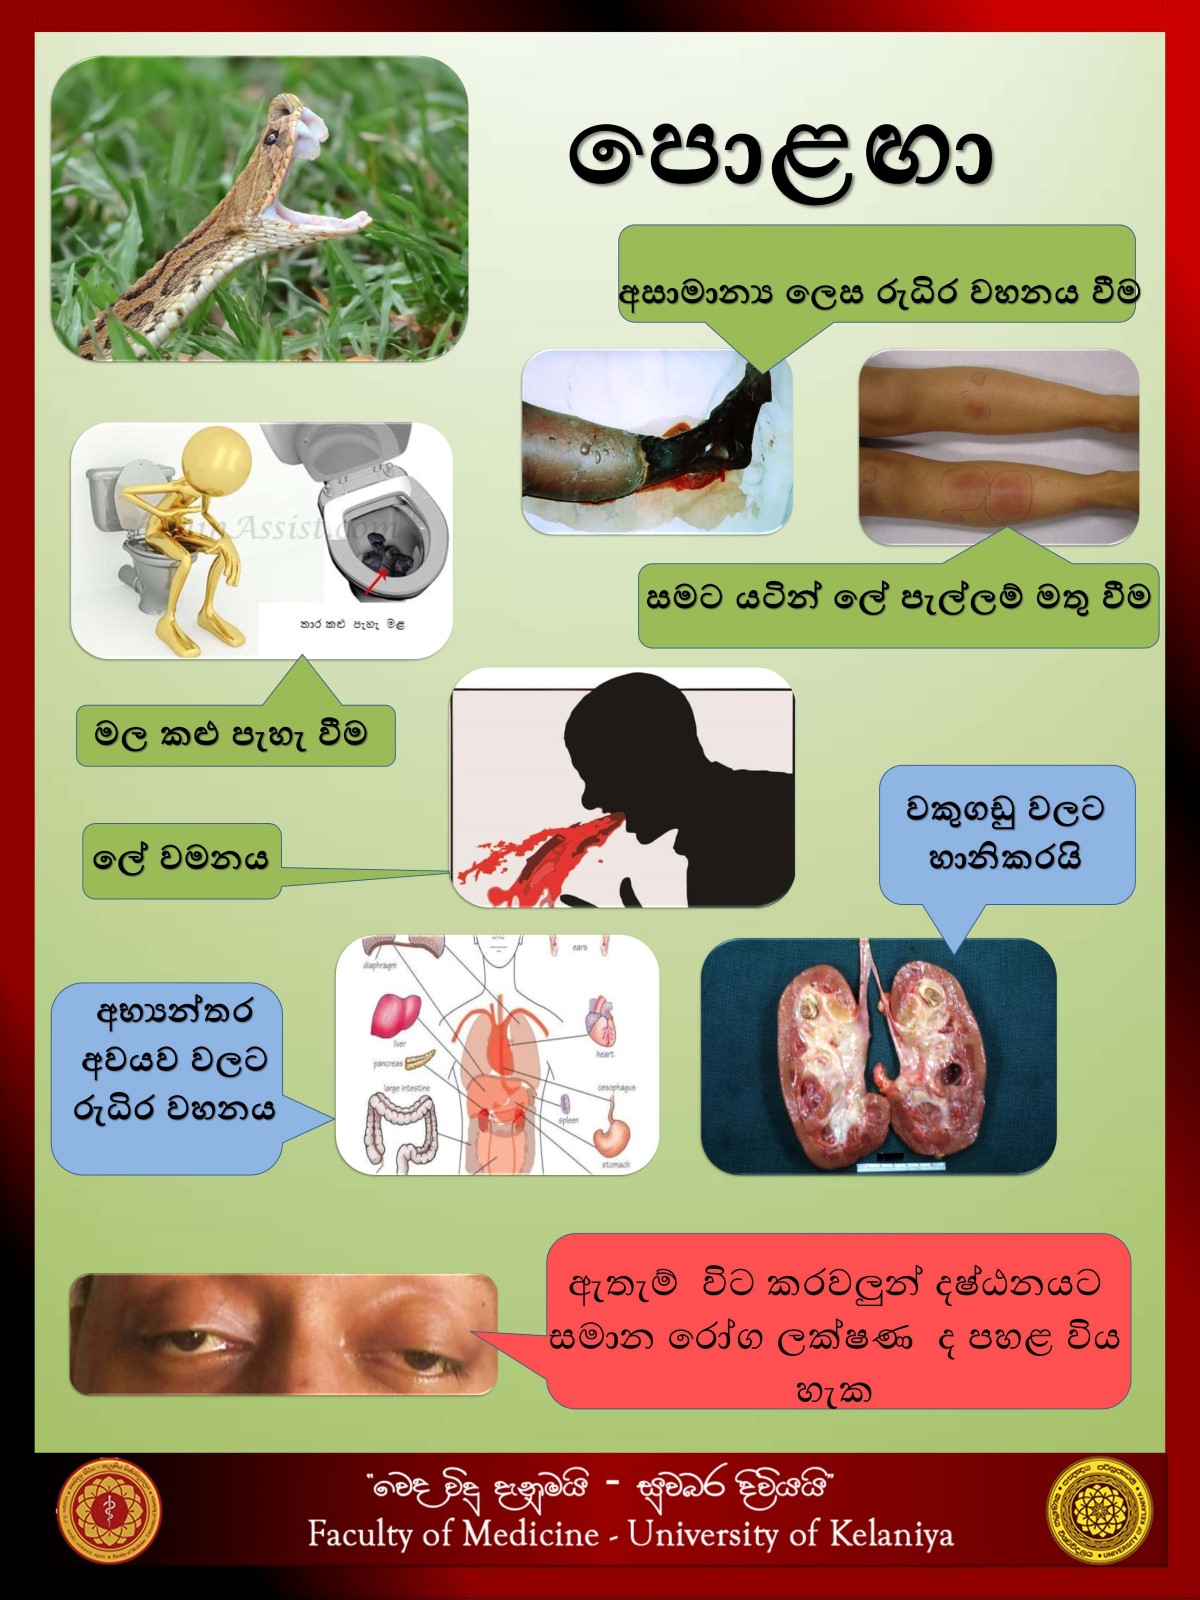 http://medicine.kln.ac.lk/vedavidudanuma/images/gallery/Trauma_Zone/Toxicology/viper_001.jpg